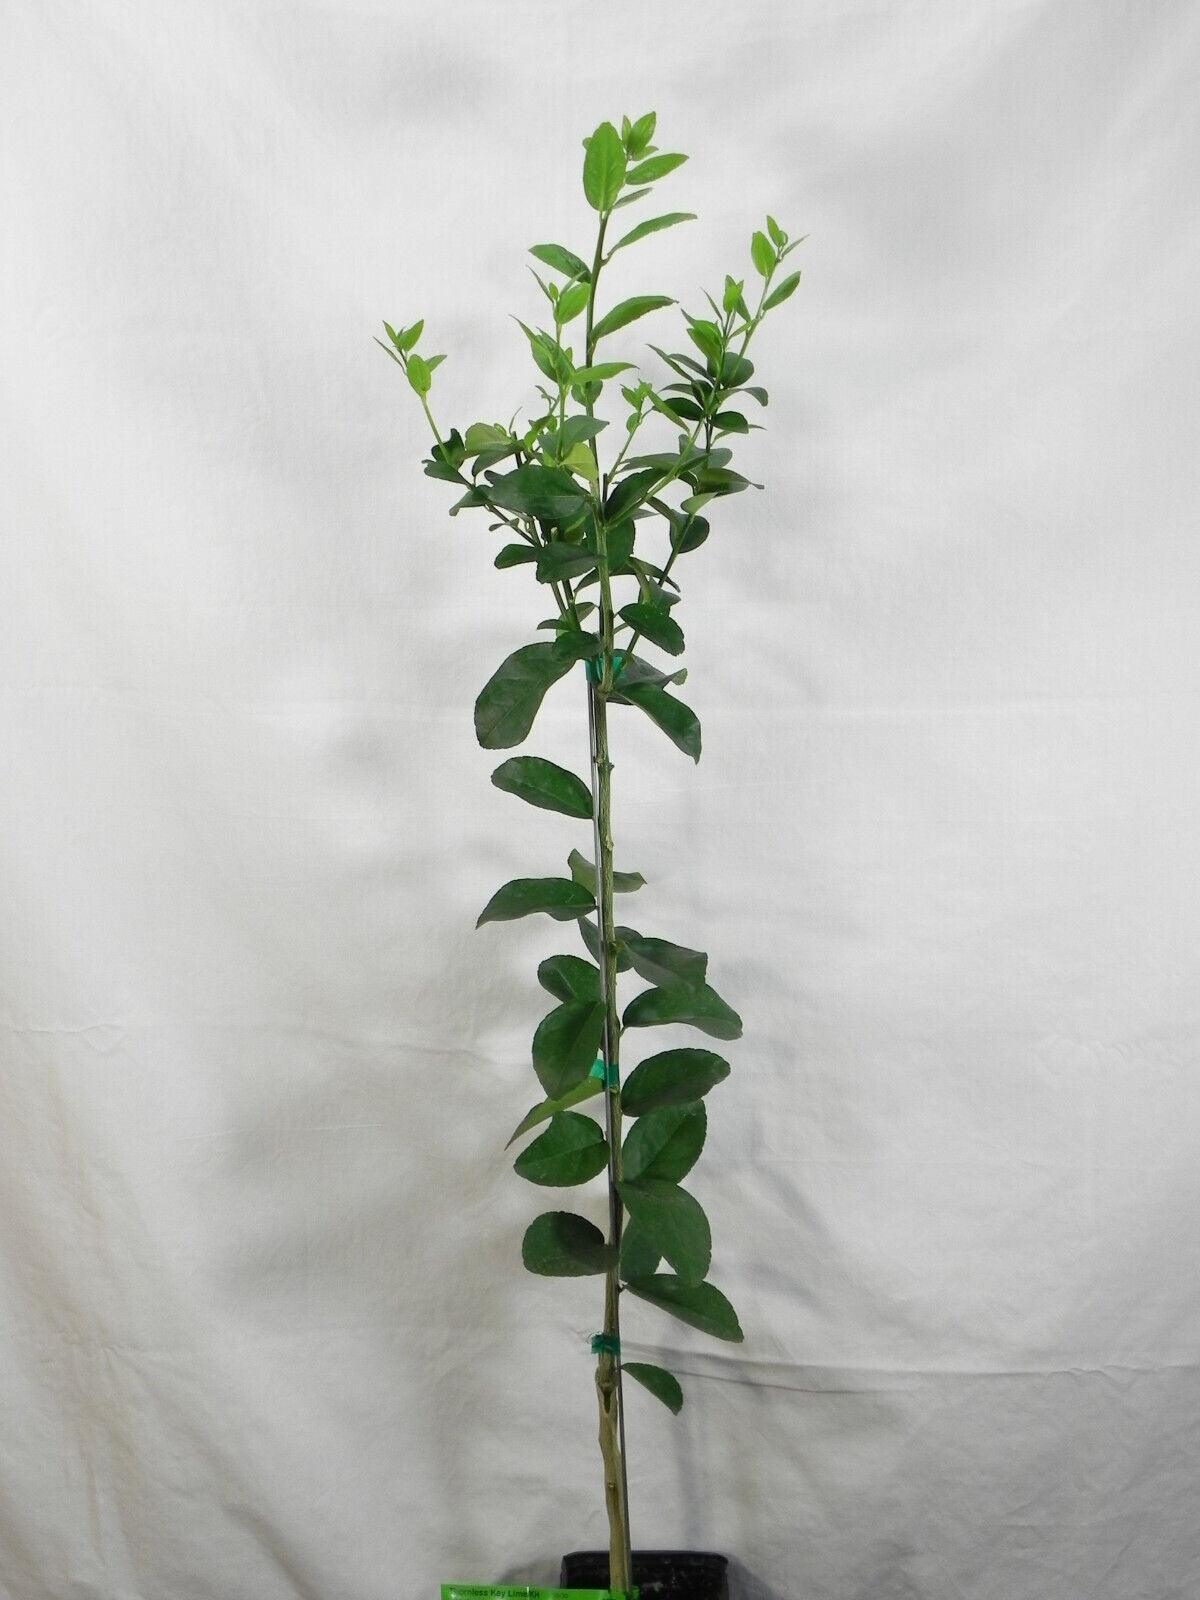 Mexican Key Lime Tree - 26-30" Tall Live Plant, Gallon Pot - Citrus aurantifolia - The Nursery Center